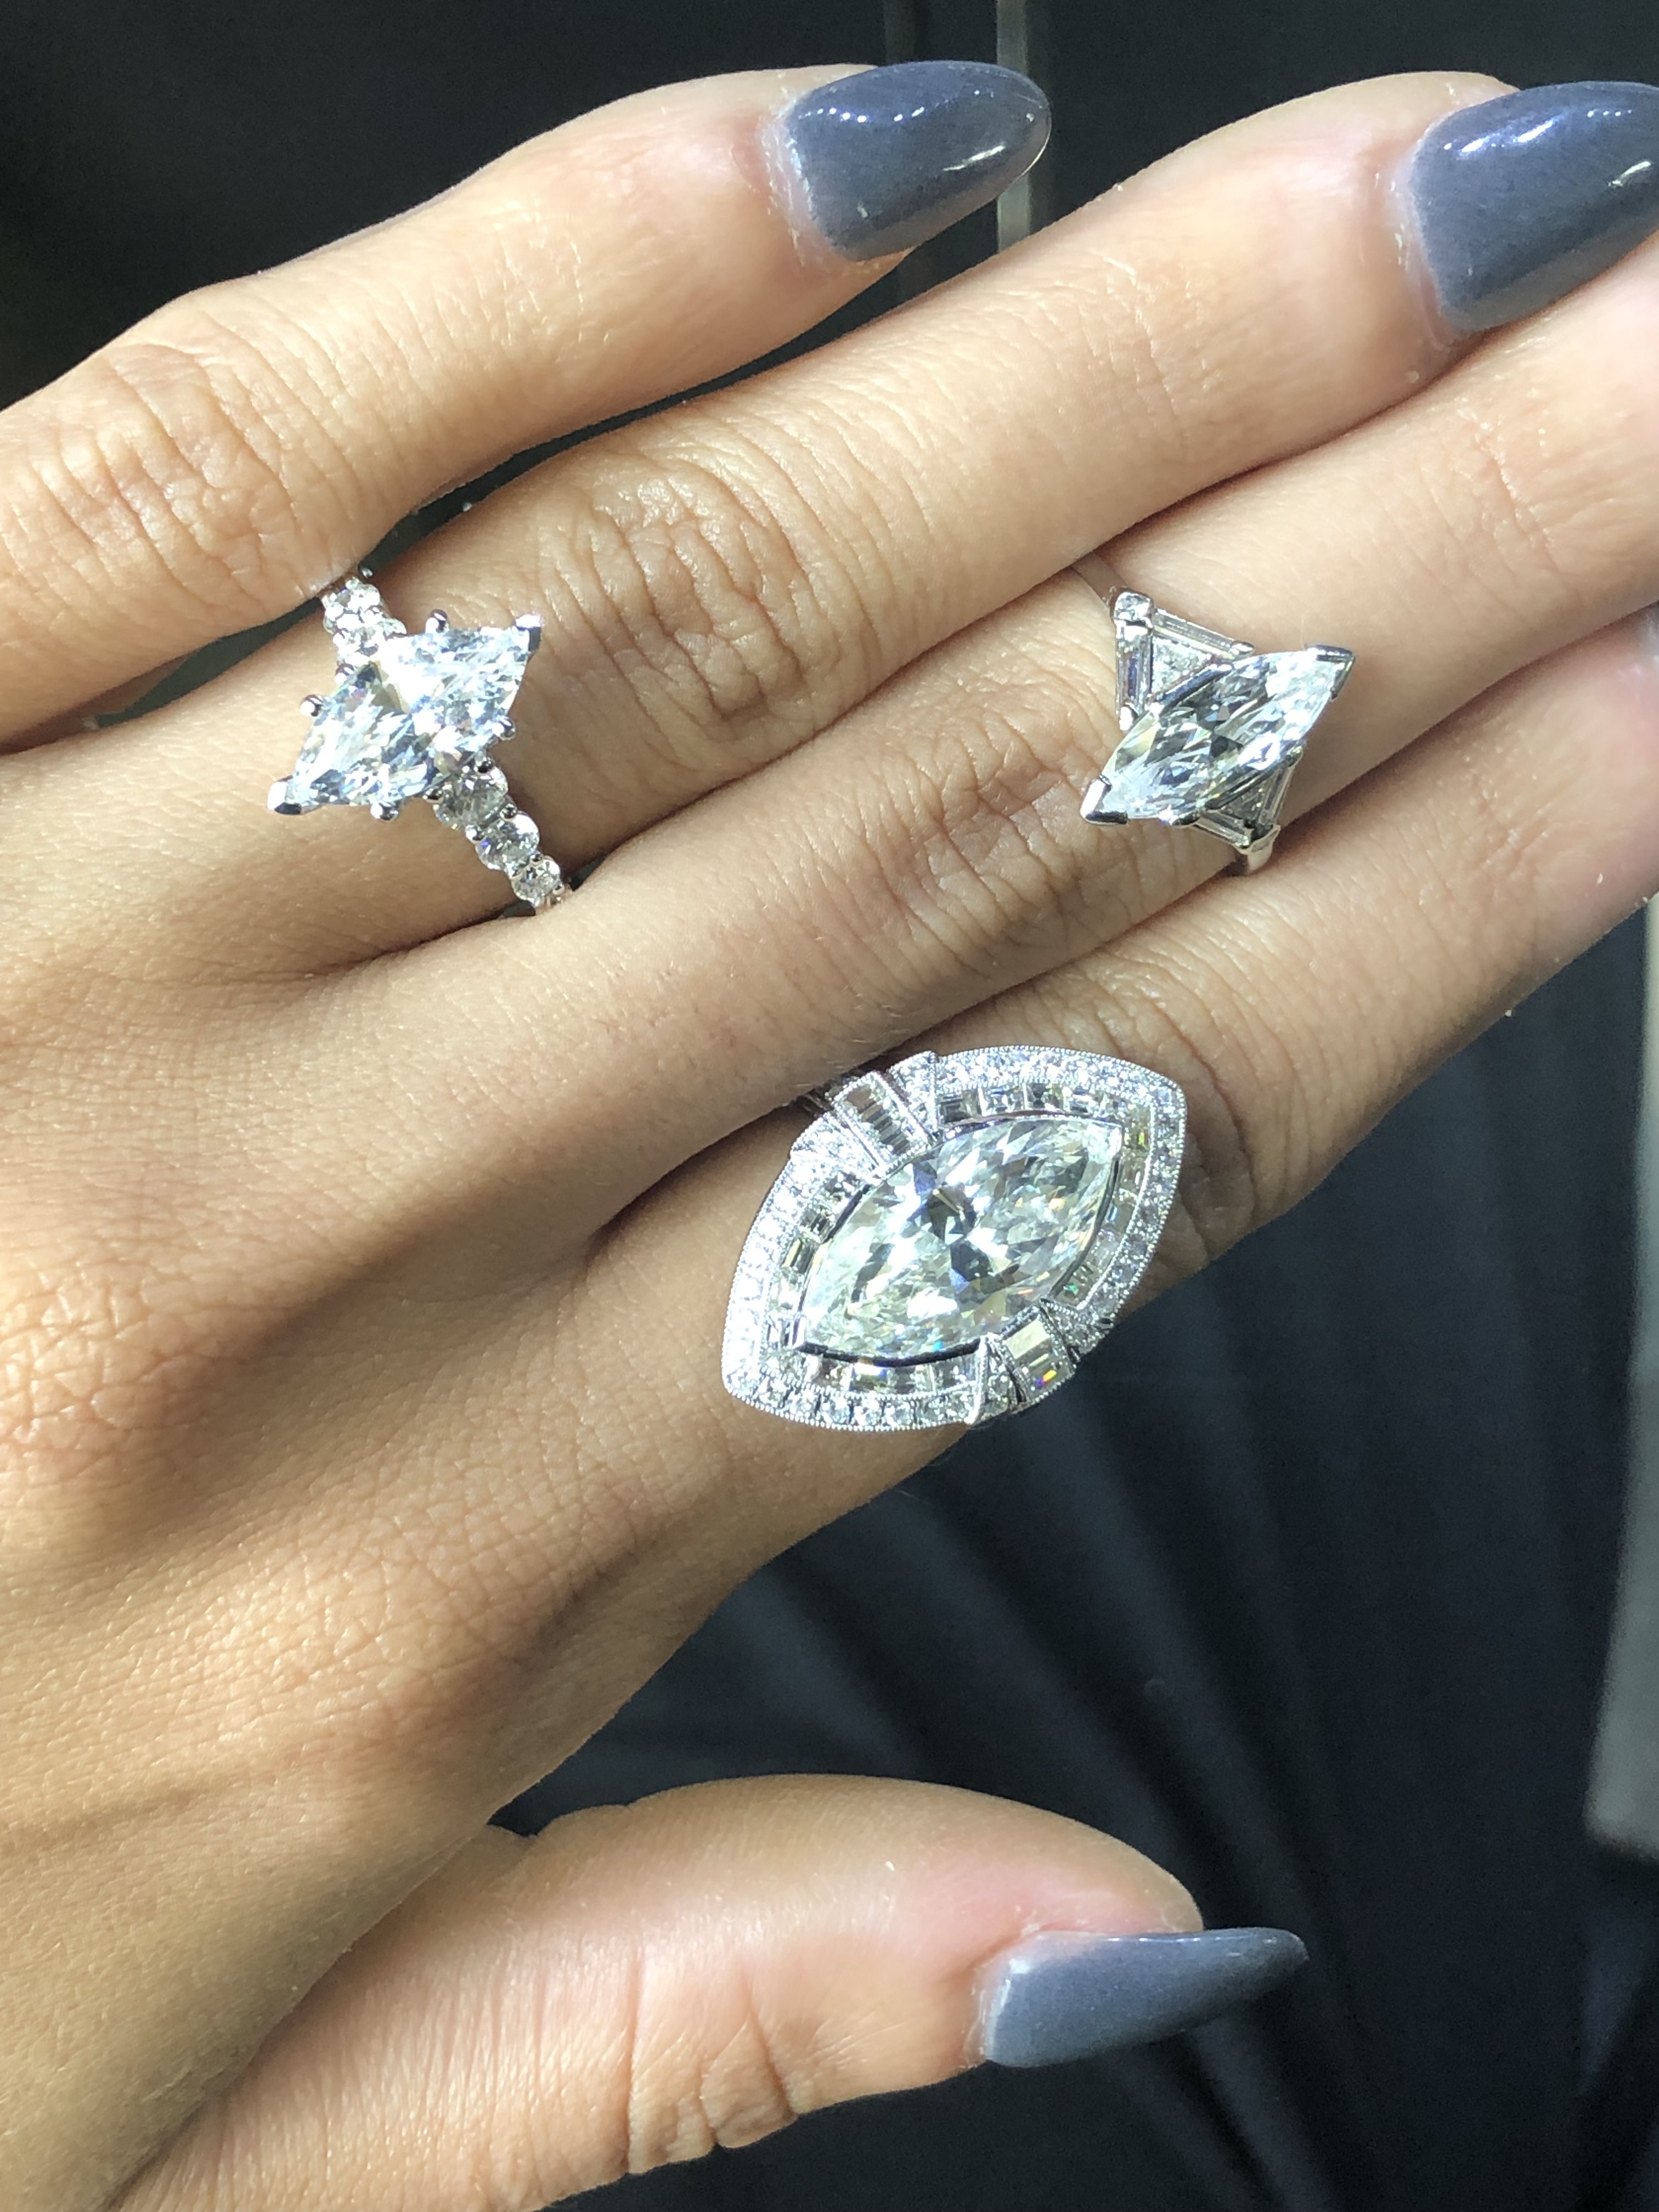 Marquise diamond engagement rings